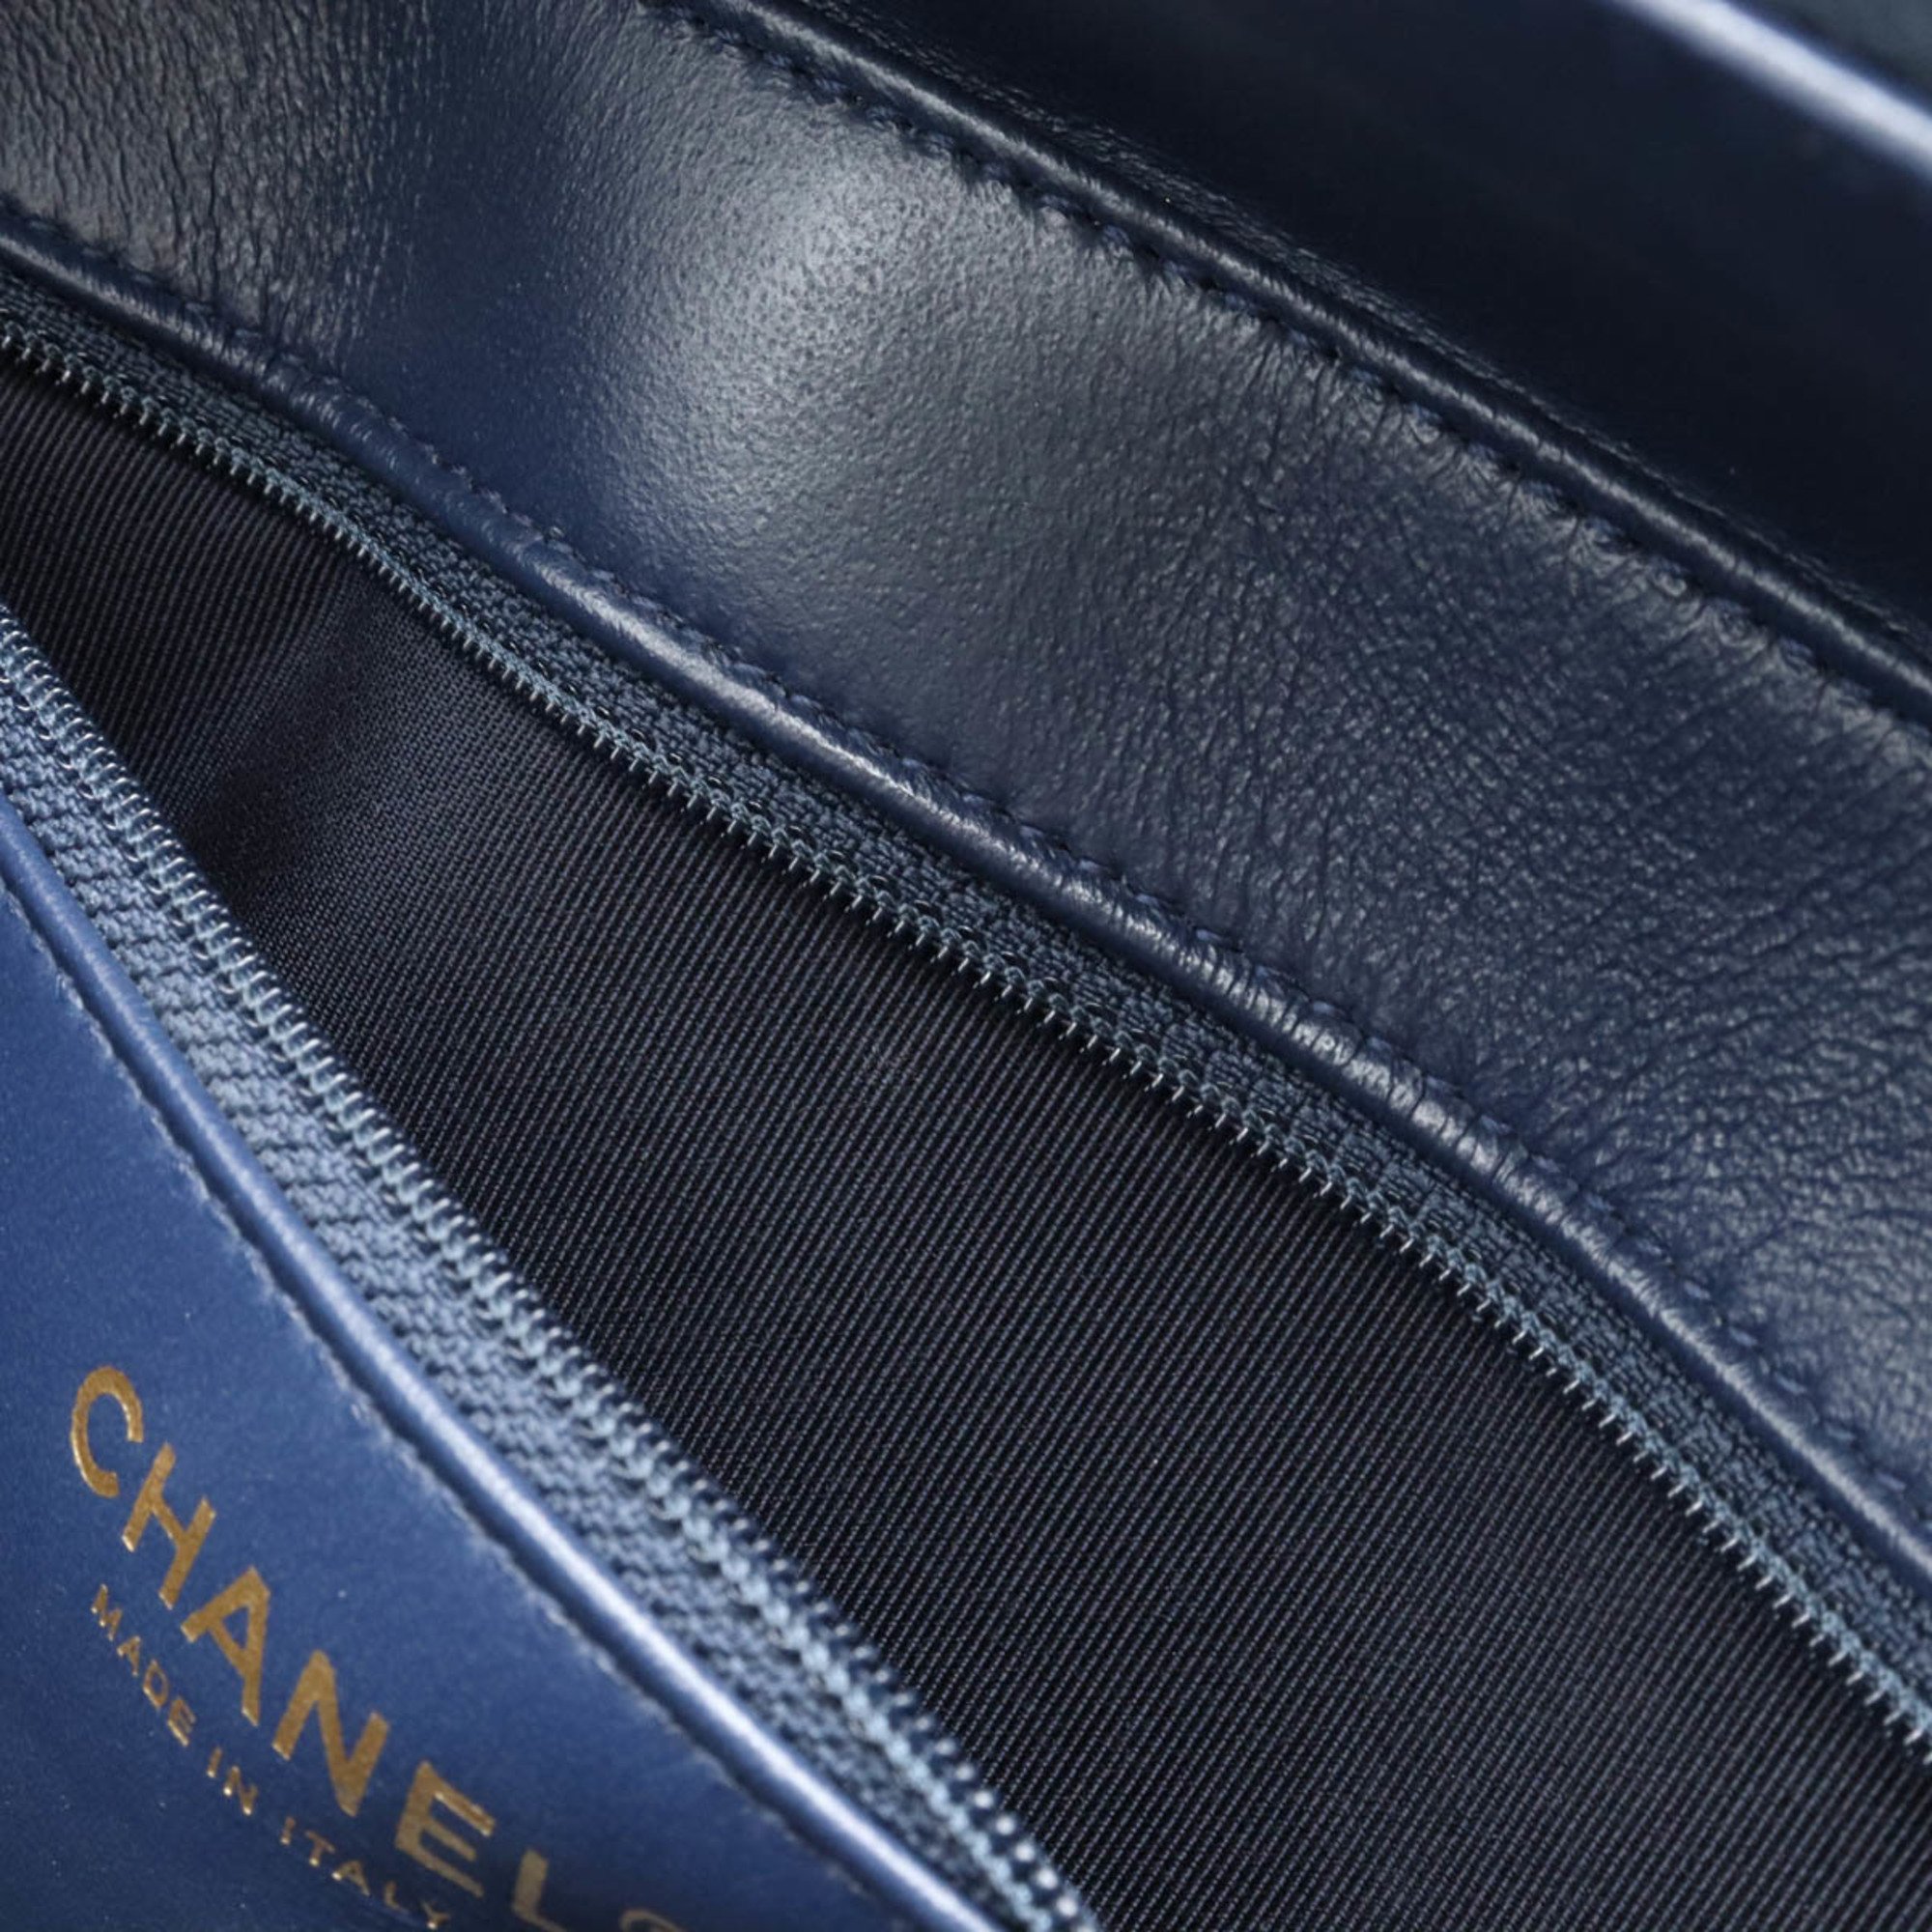 CHANEL CC Filigree Matelasse Vanity Case Handbag Chain Shoulder Caviar Skin Navy A93344